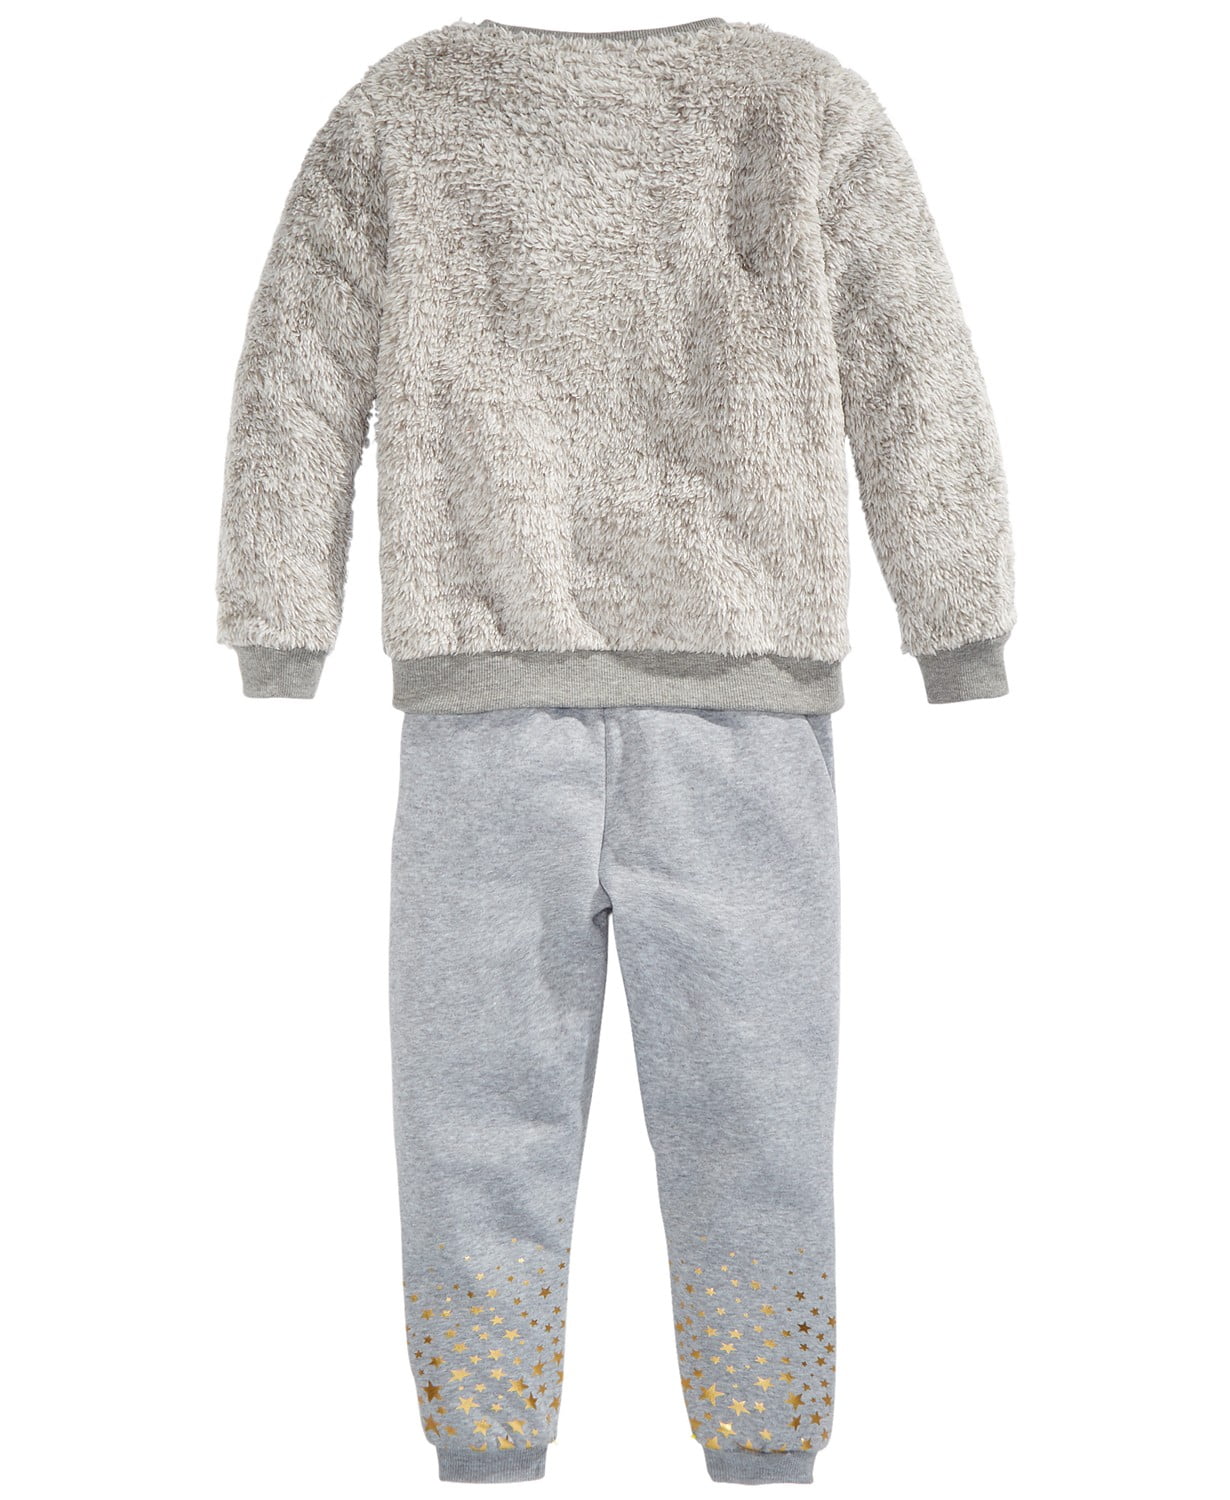 Cream Size 3T U-Knit Toddler Girls' Faux Fur Cuffs Pullover Sweater 